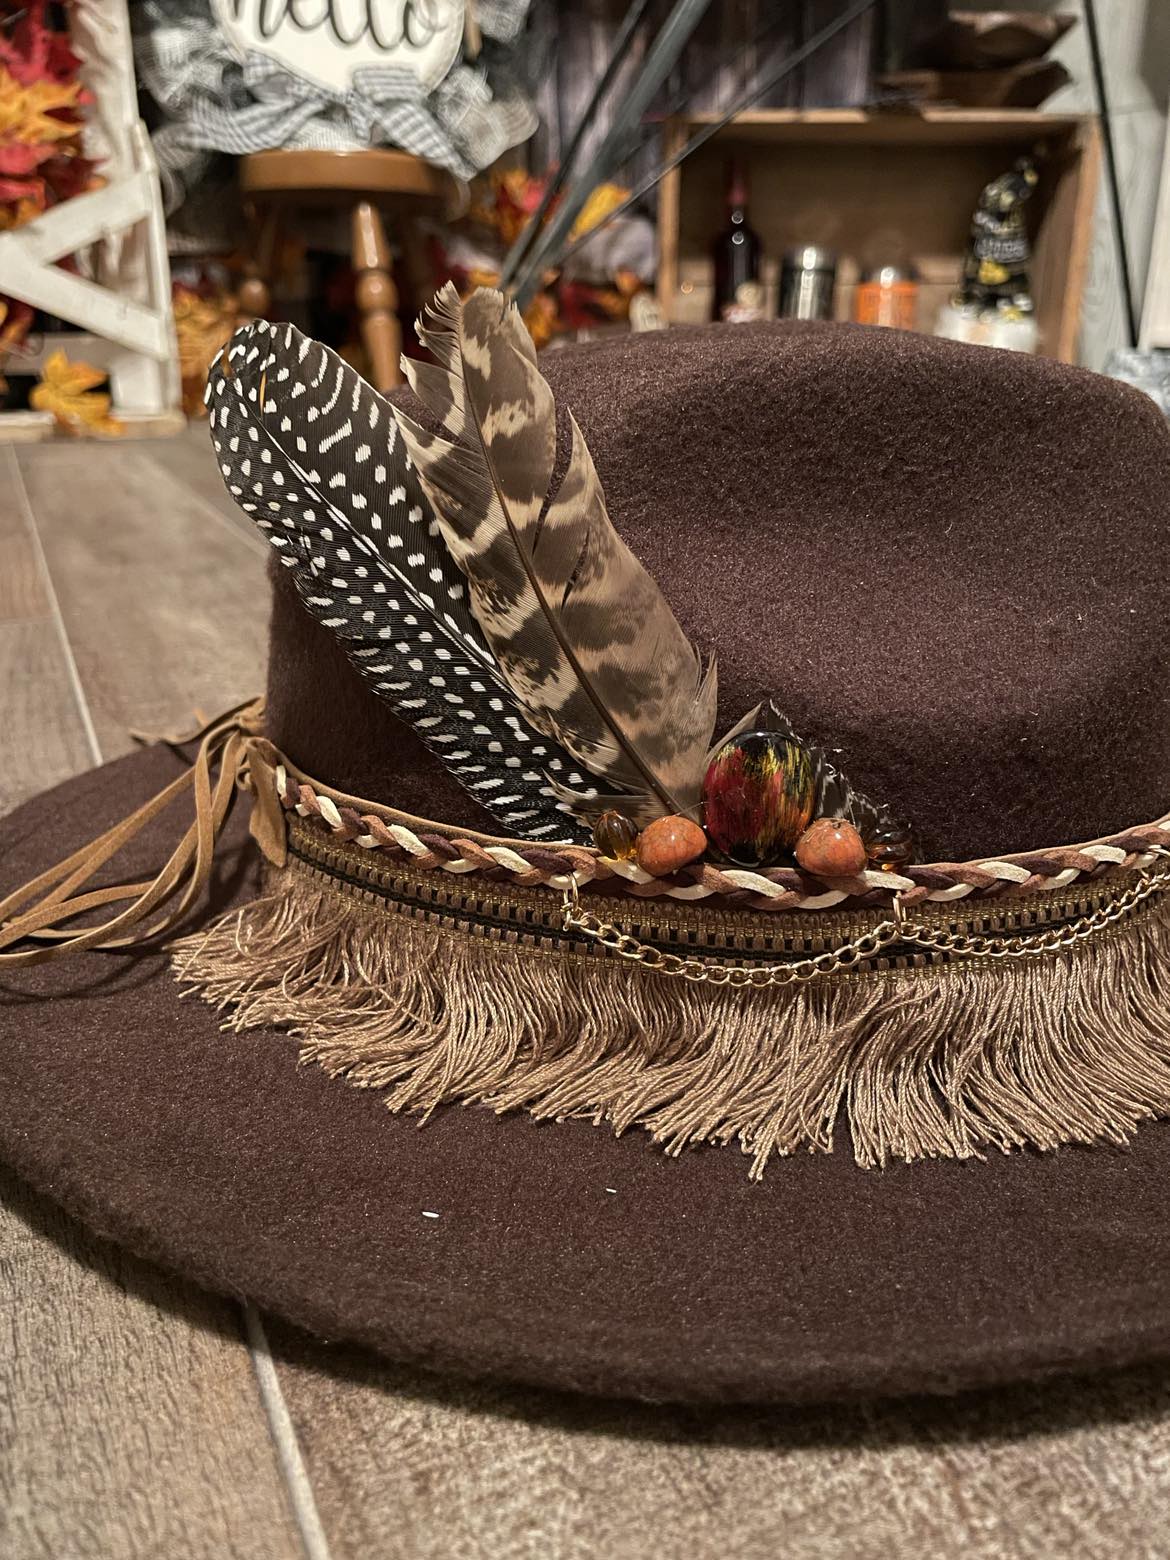 Western-style Brown Felt Hat w/ Embellishments-"Roseanne"